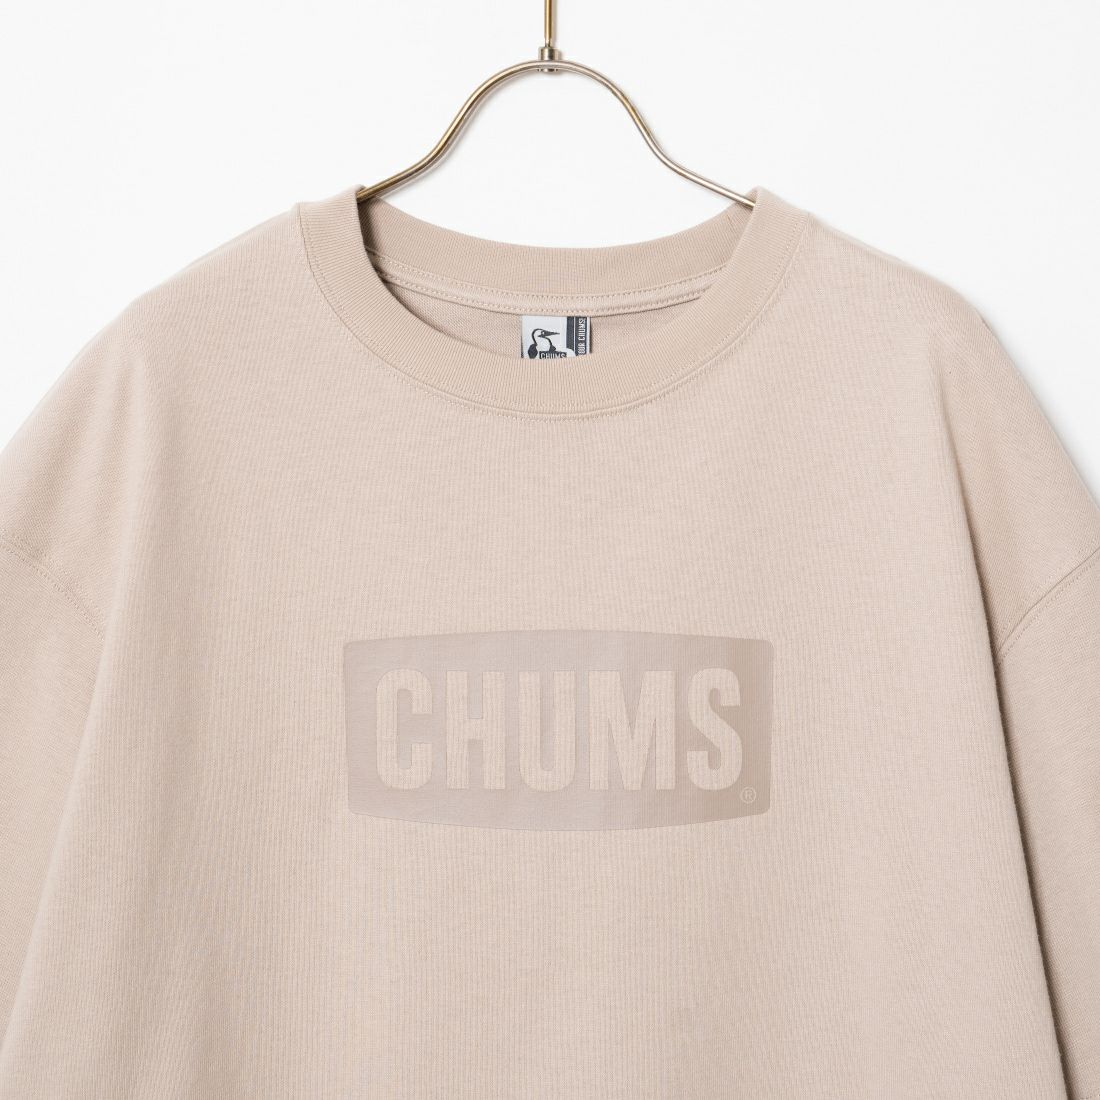 CHUMS [チャムス] ヘビーウエイトチャムスロゴTシャツ [CH01-2271] G057 GREIG